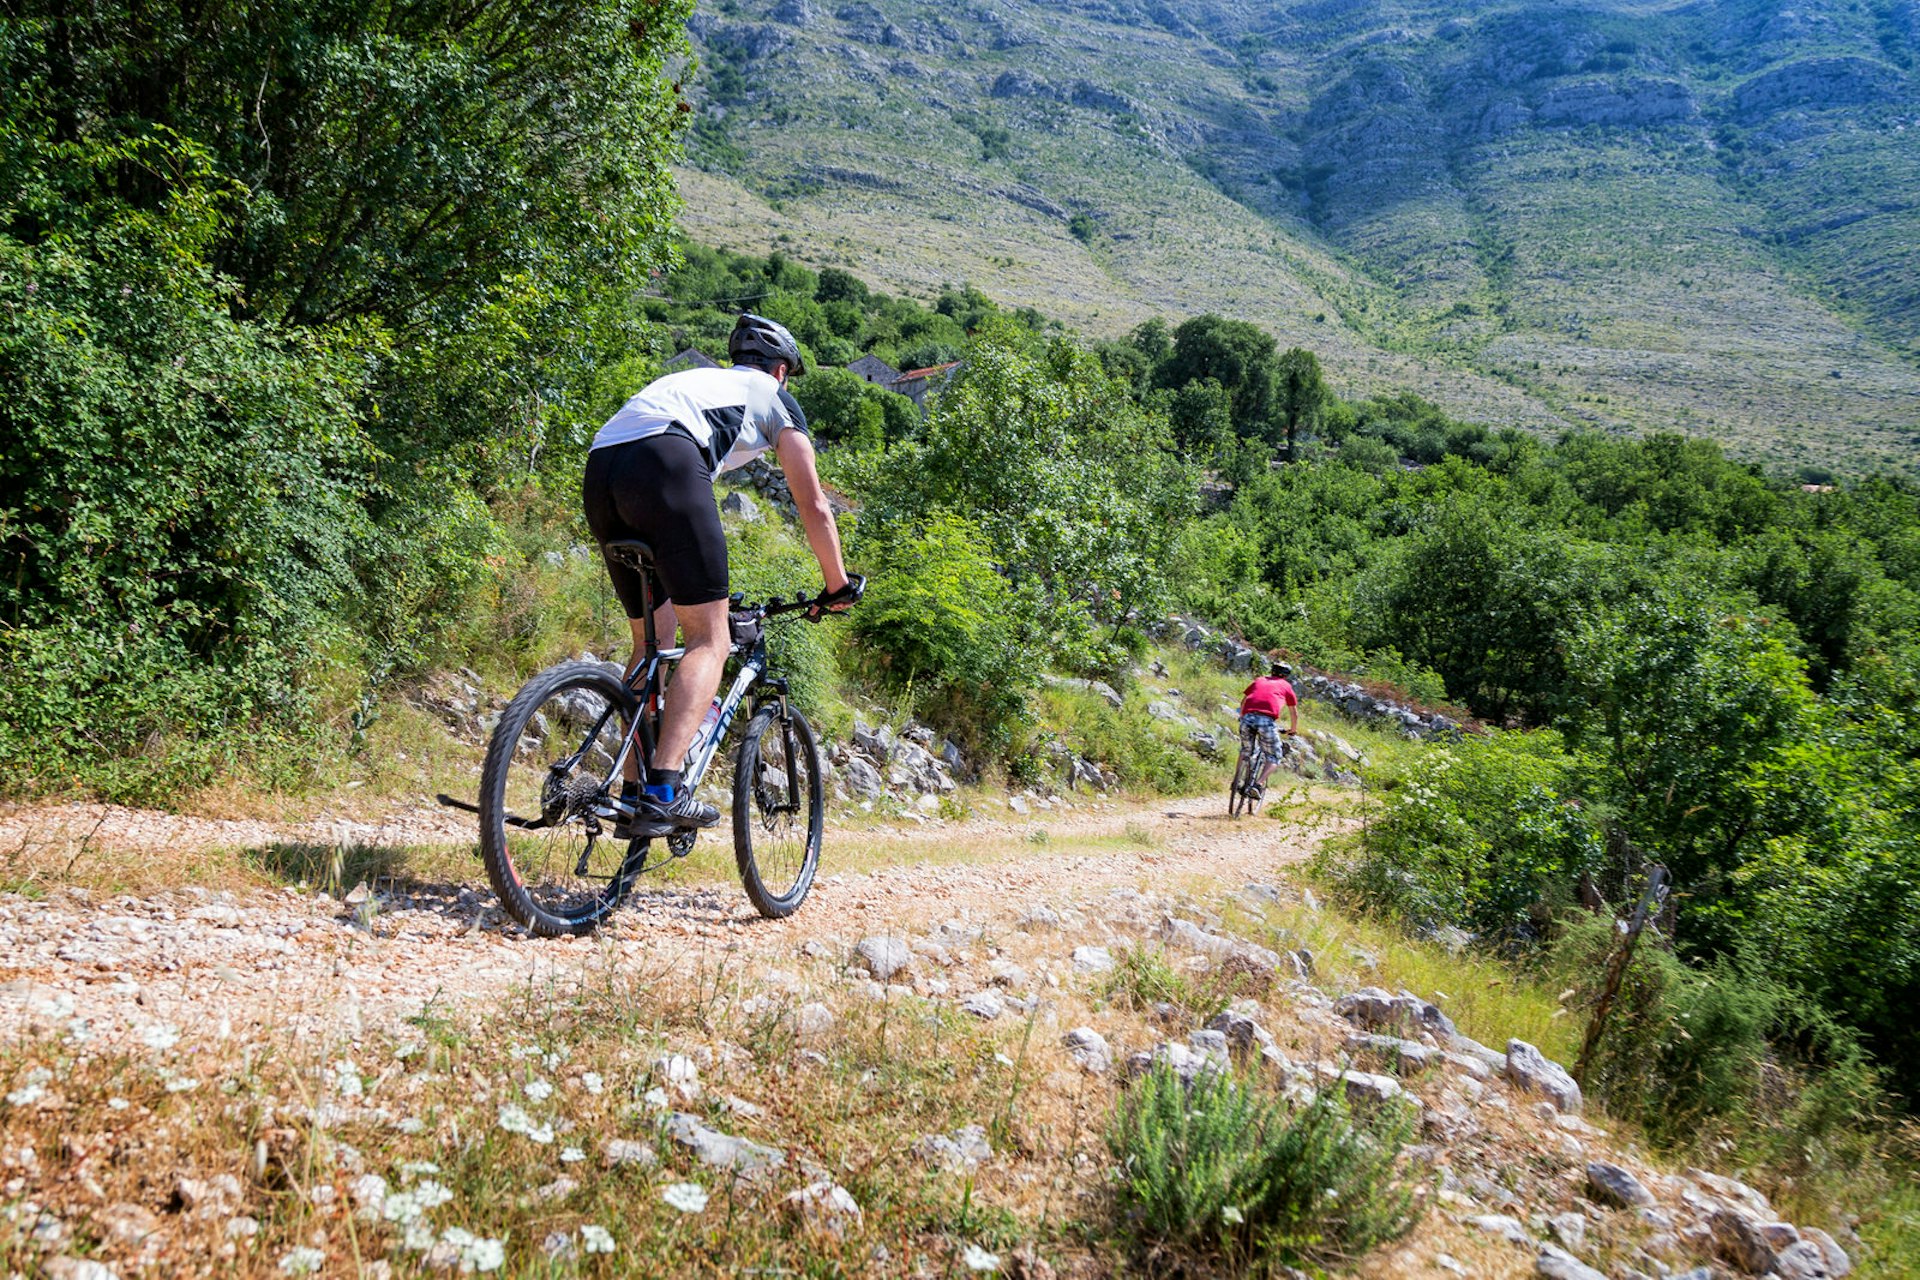 Two men on mountain bikes descend down a steep rocky path